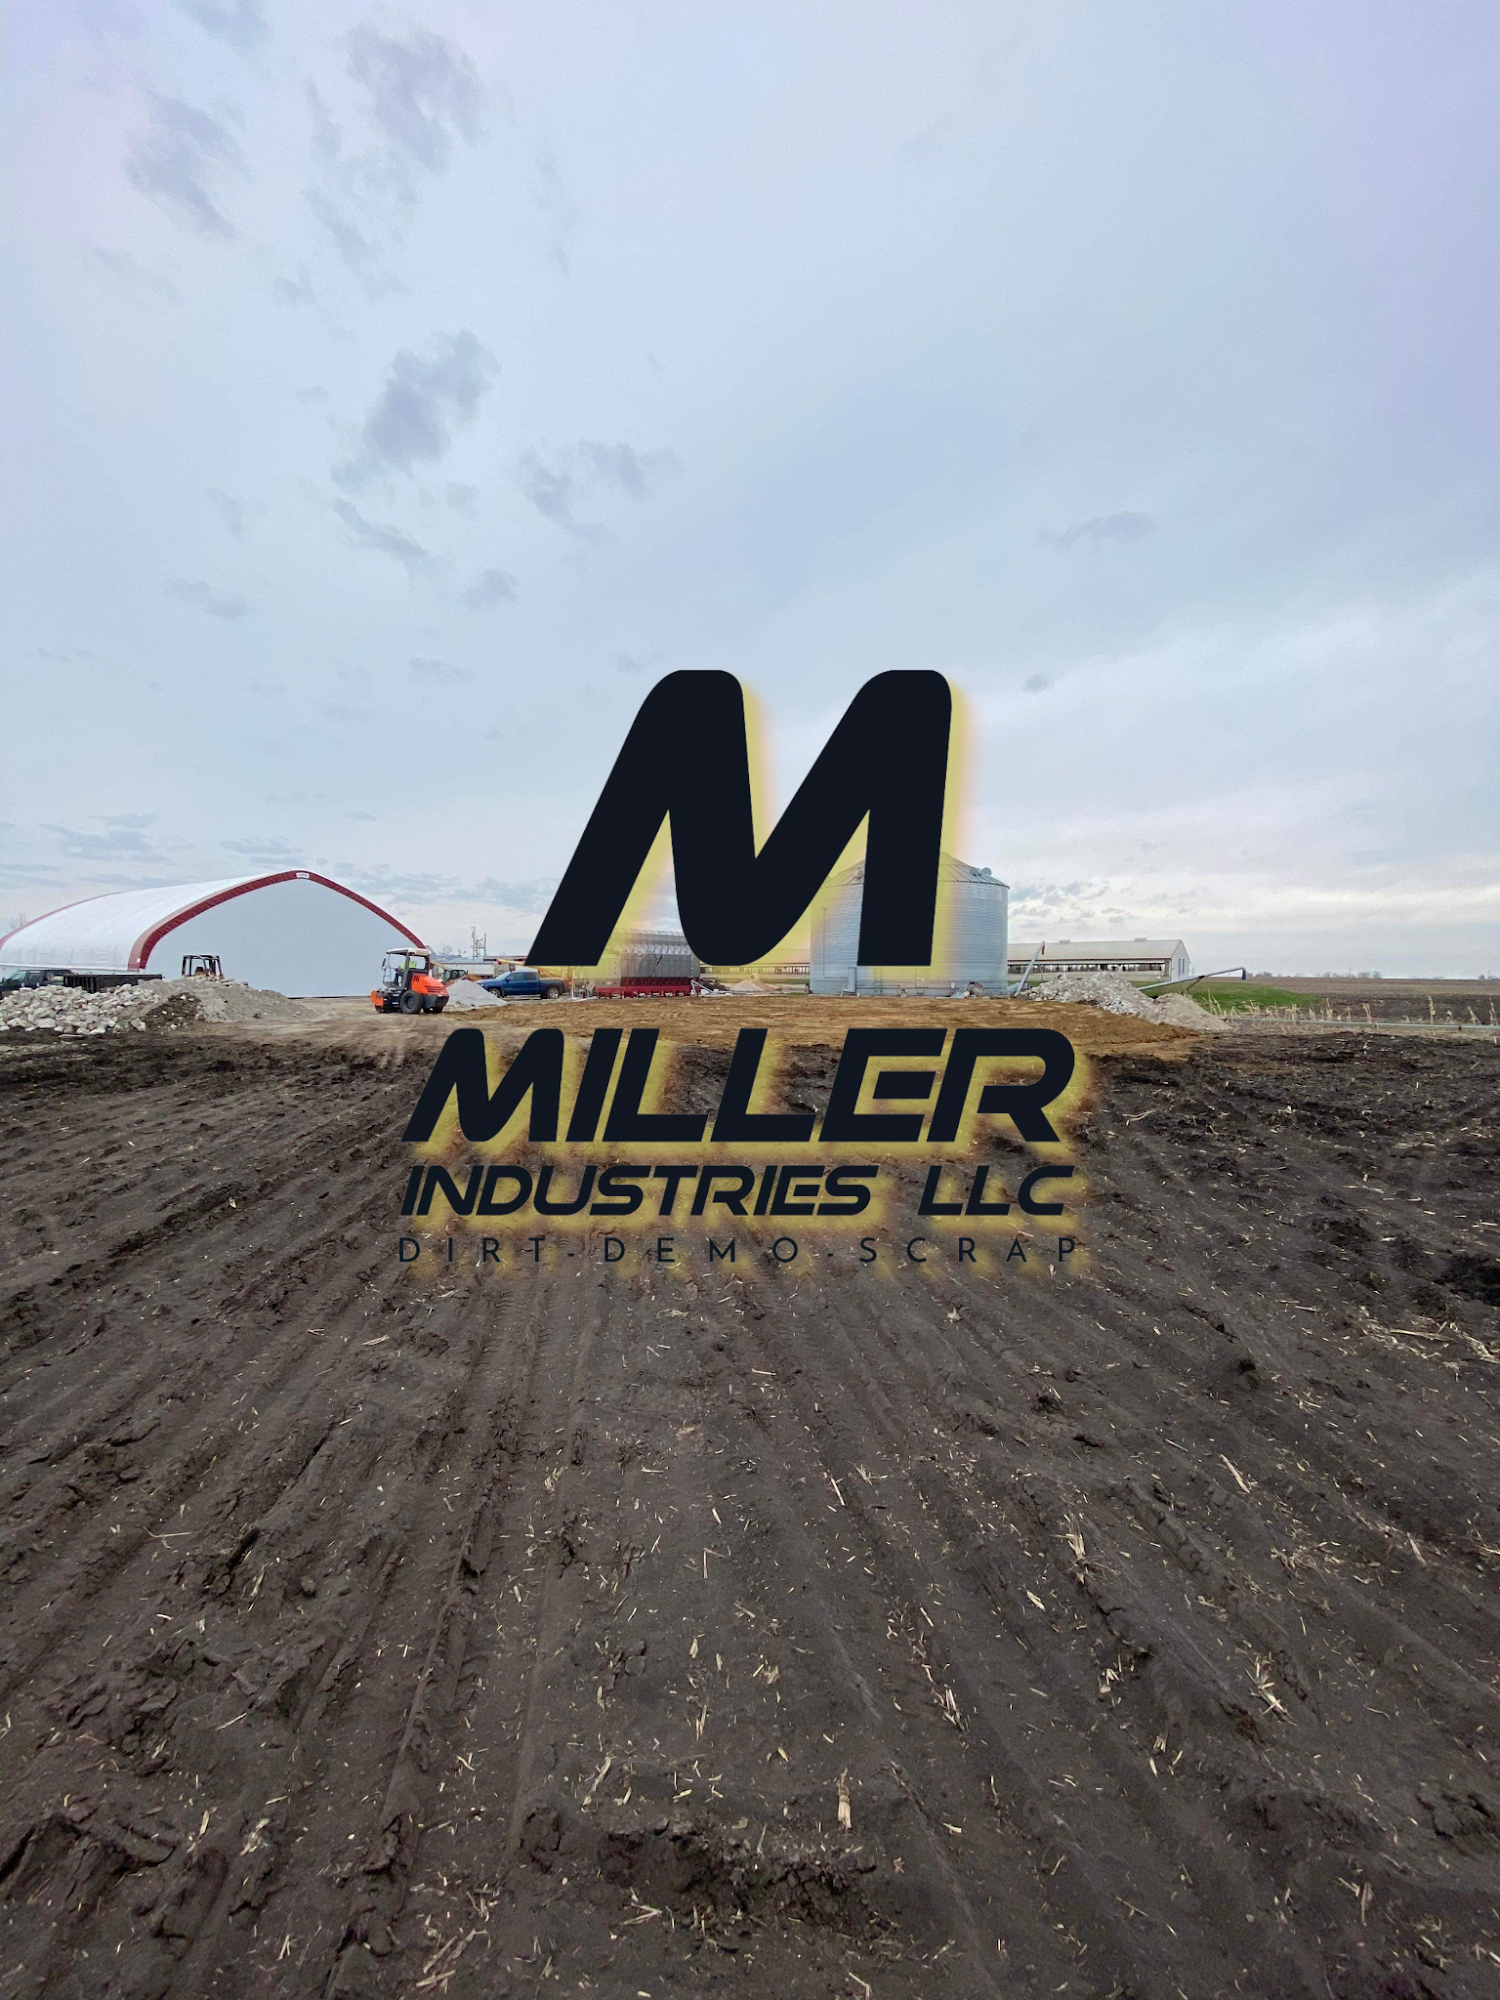 Miller Industries LLC 111 S Pilot St, Pilot Mound Iowa 50223